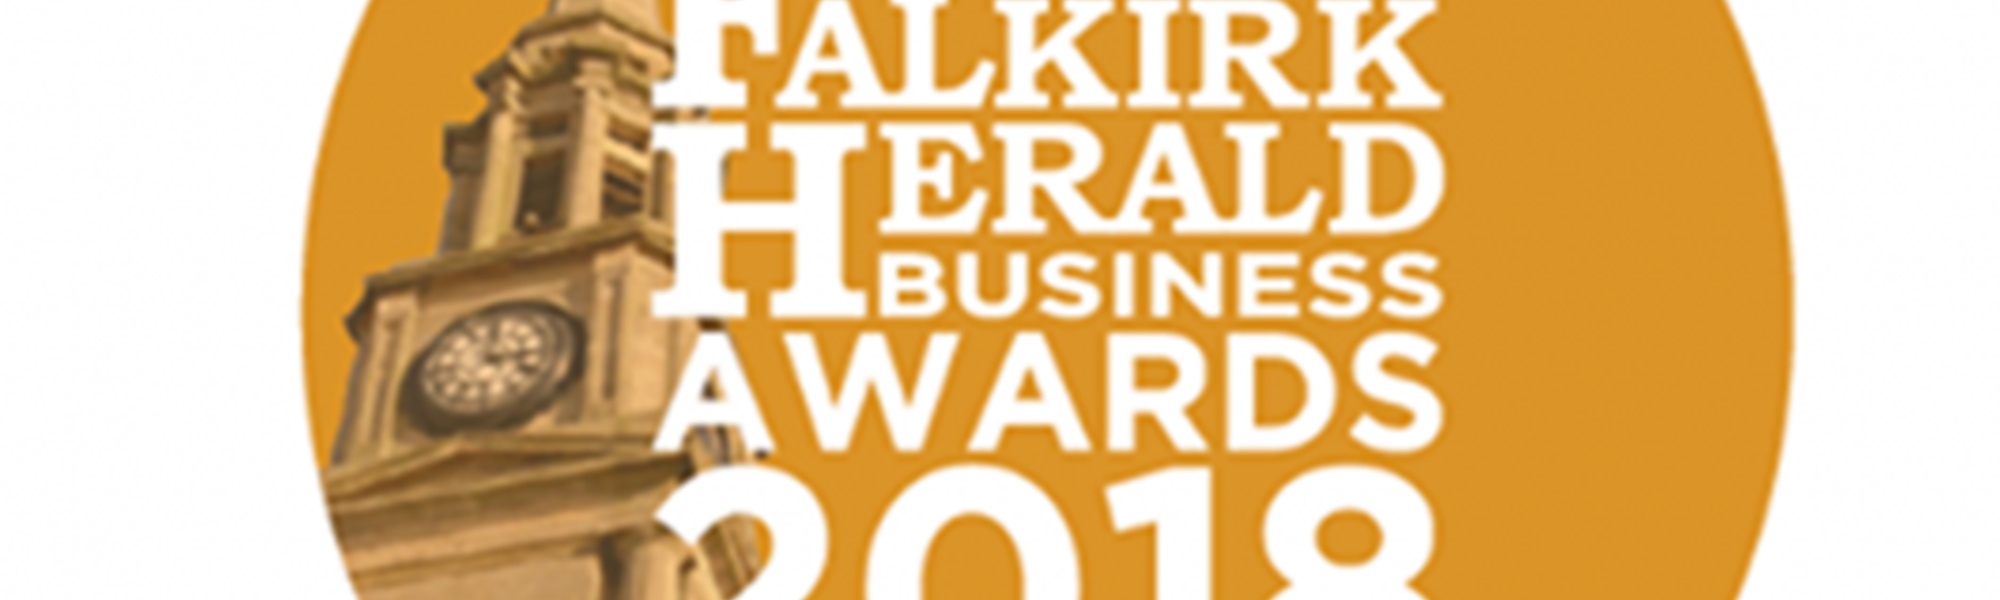 Background image: Falkirk Business Awards 2018